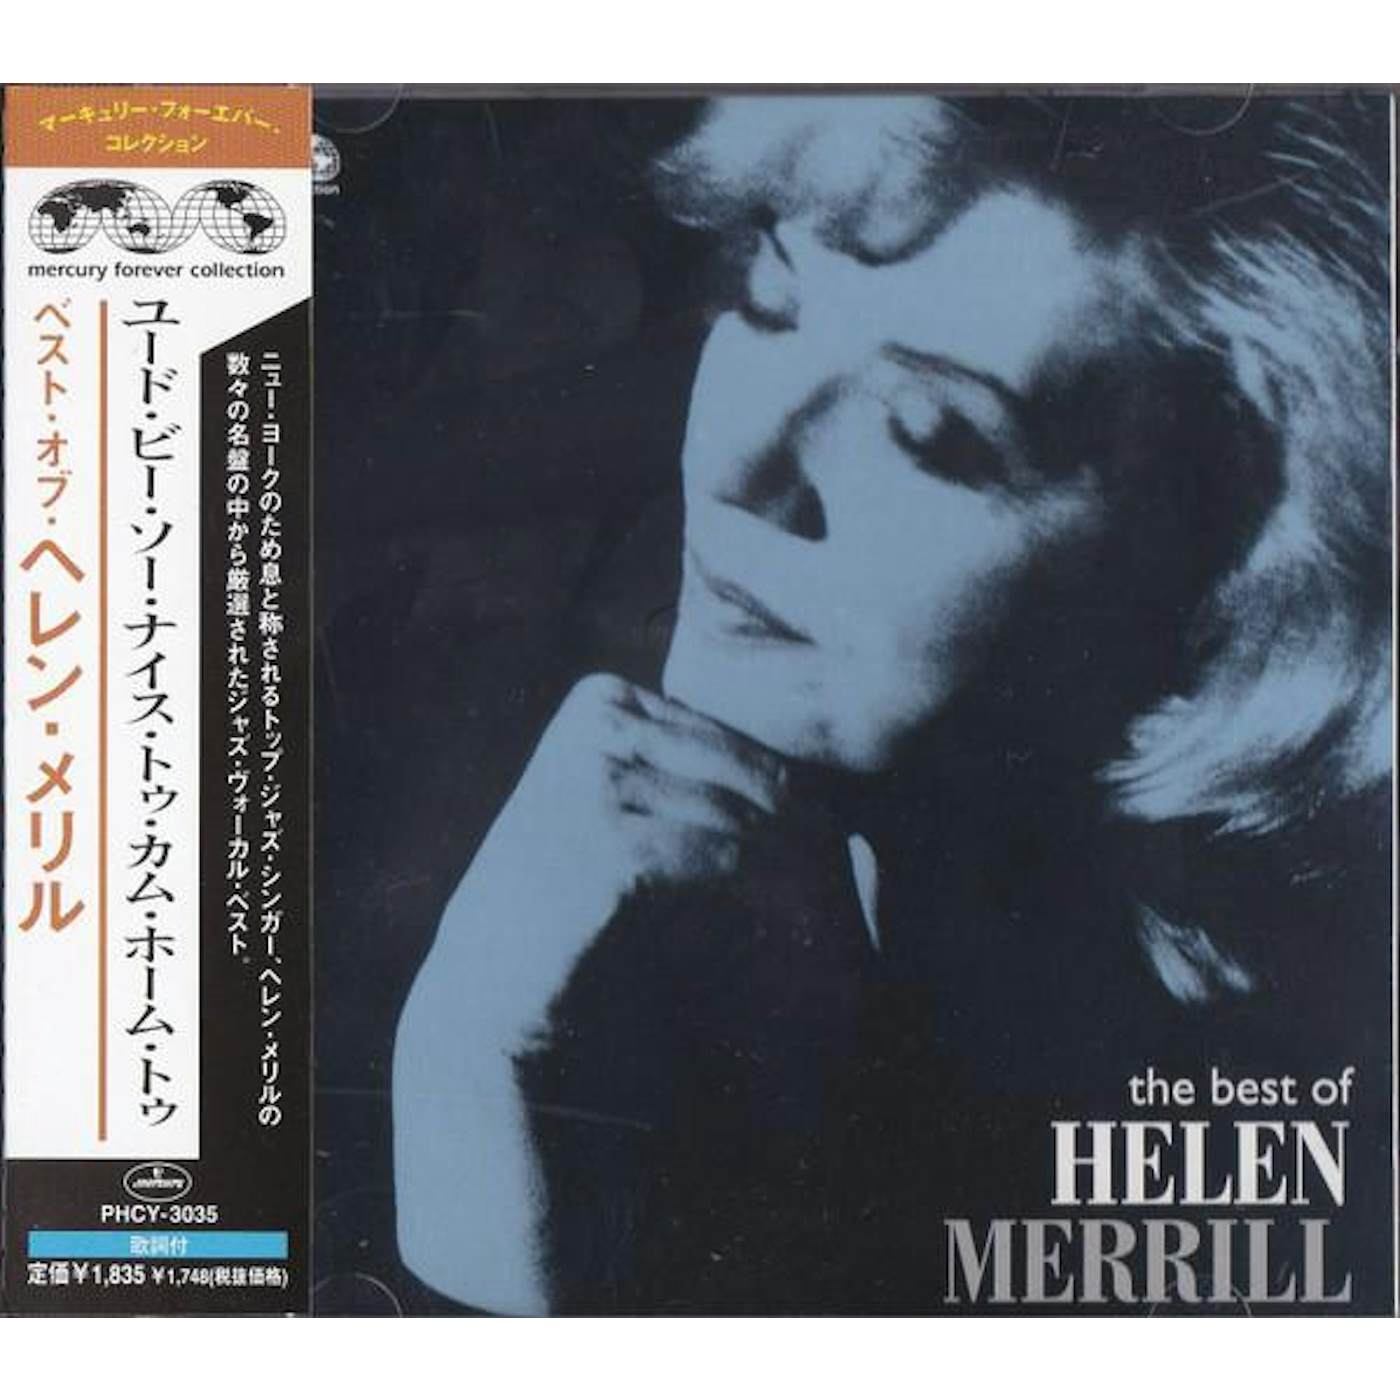 Helen Merrill BEST OF CD